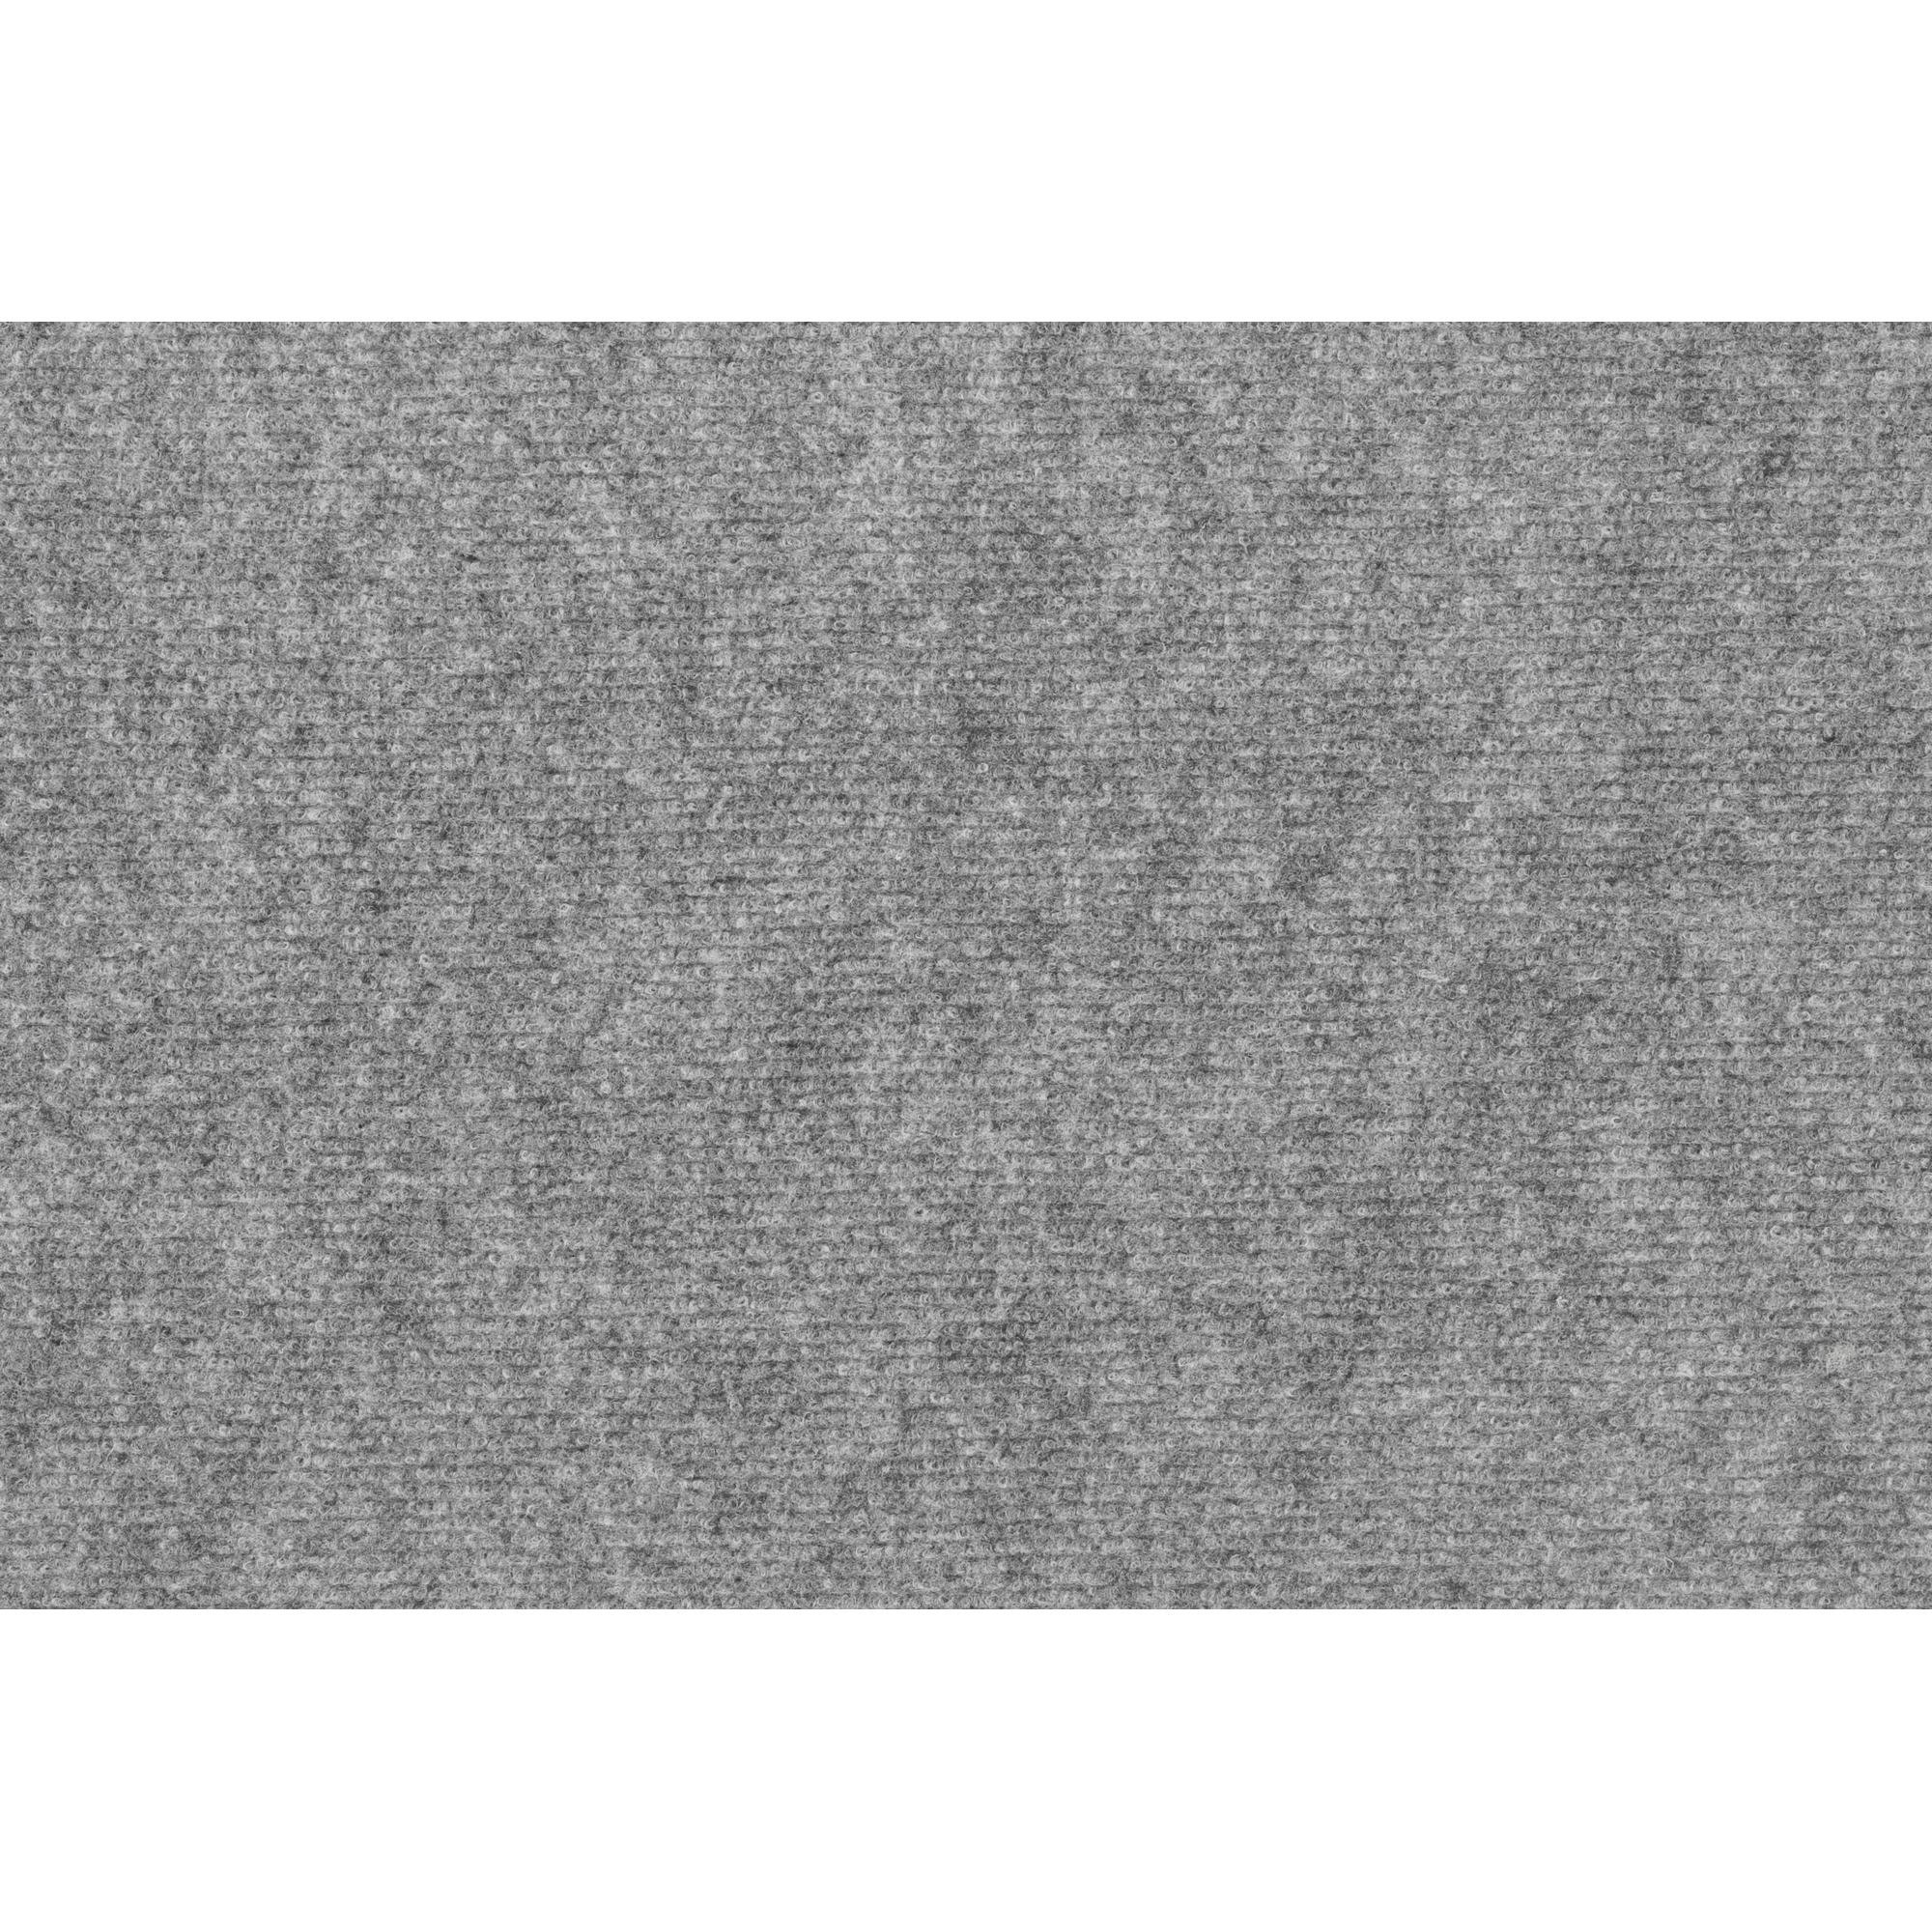 Floordirekt Nadelfilz Bodenbelag Atlas 100 x 100 cm, Grau